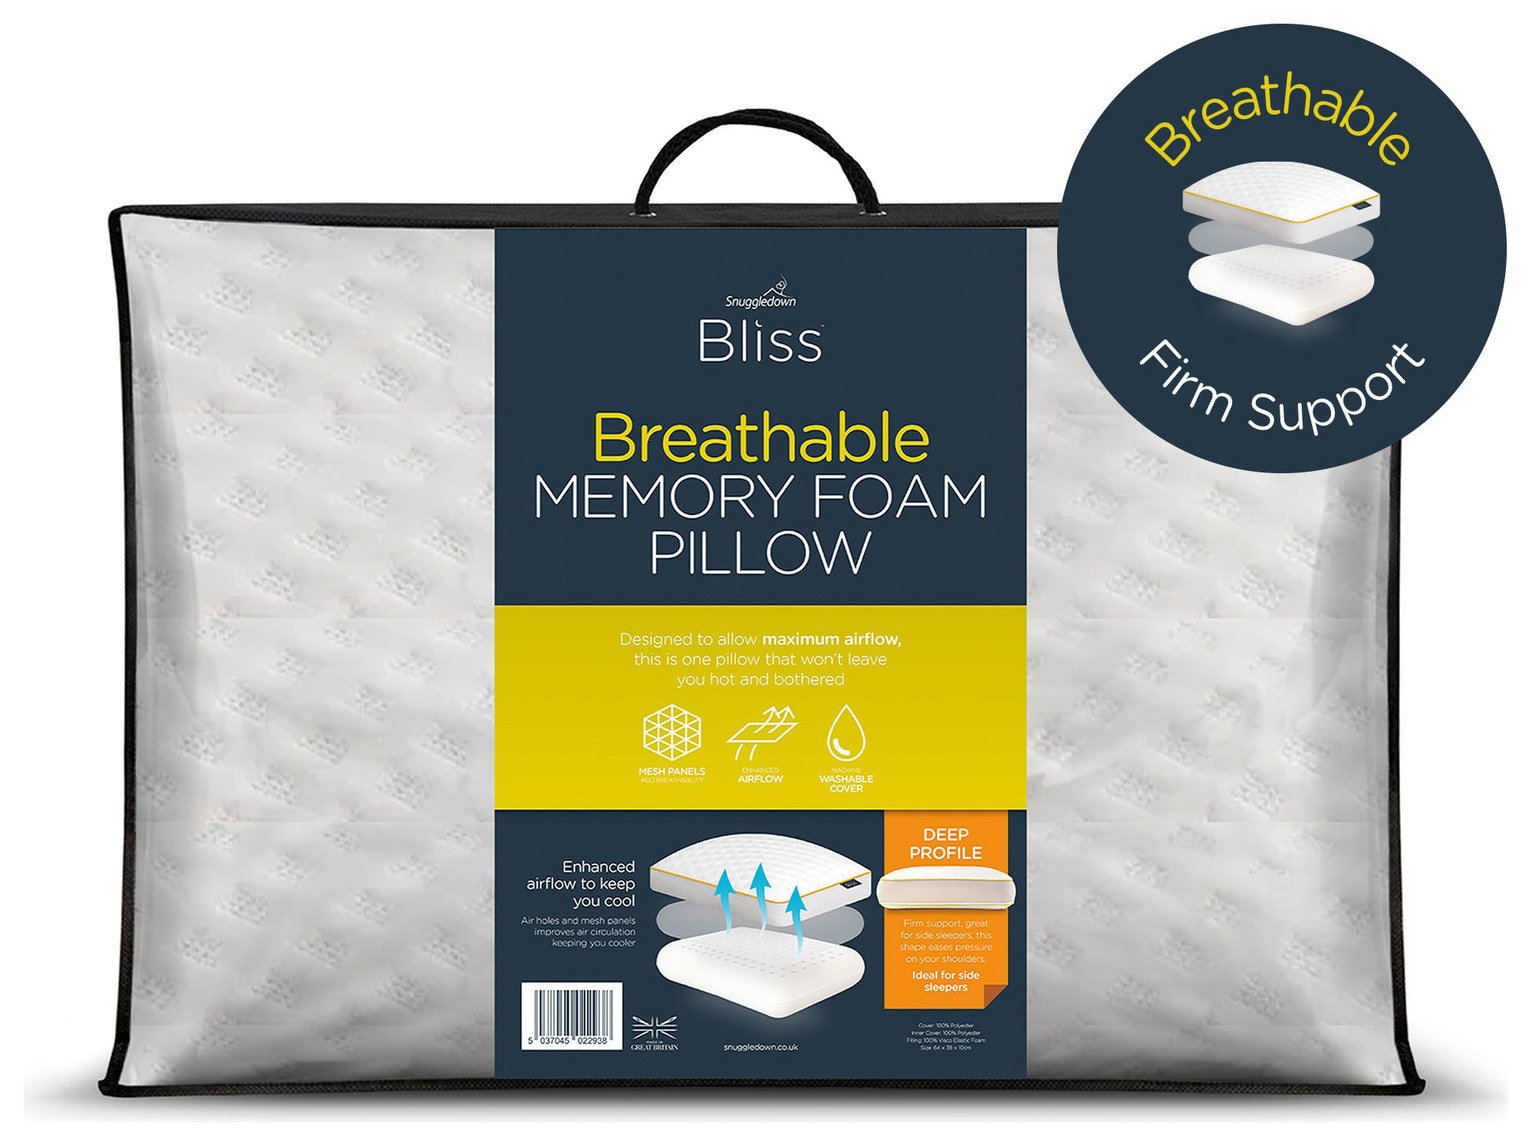 Snuggledown Bliss Breathable Memory Foam Firm Pillow